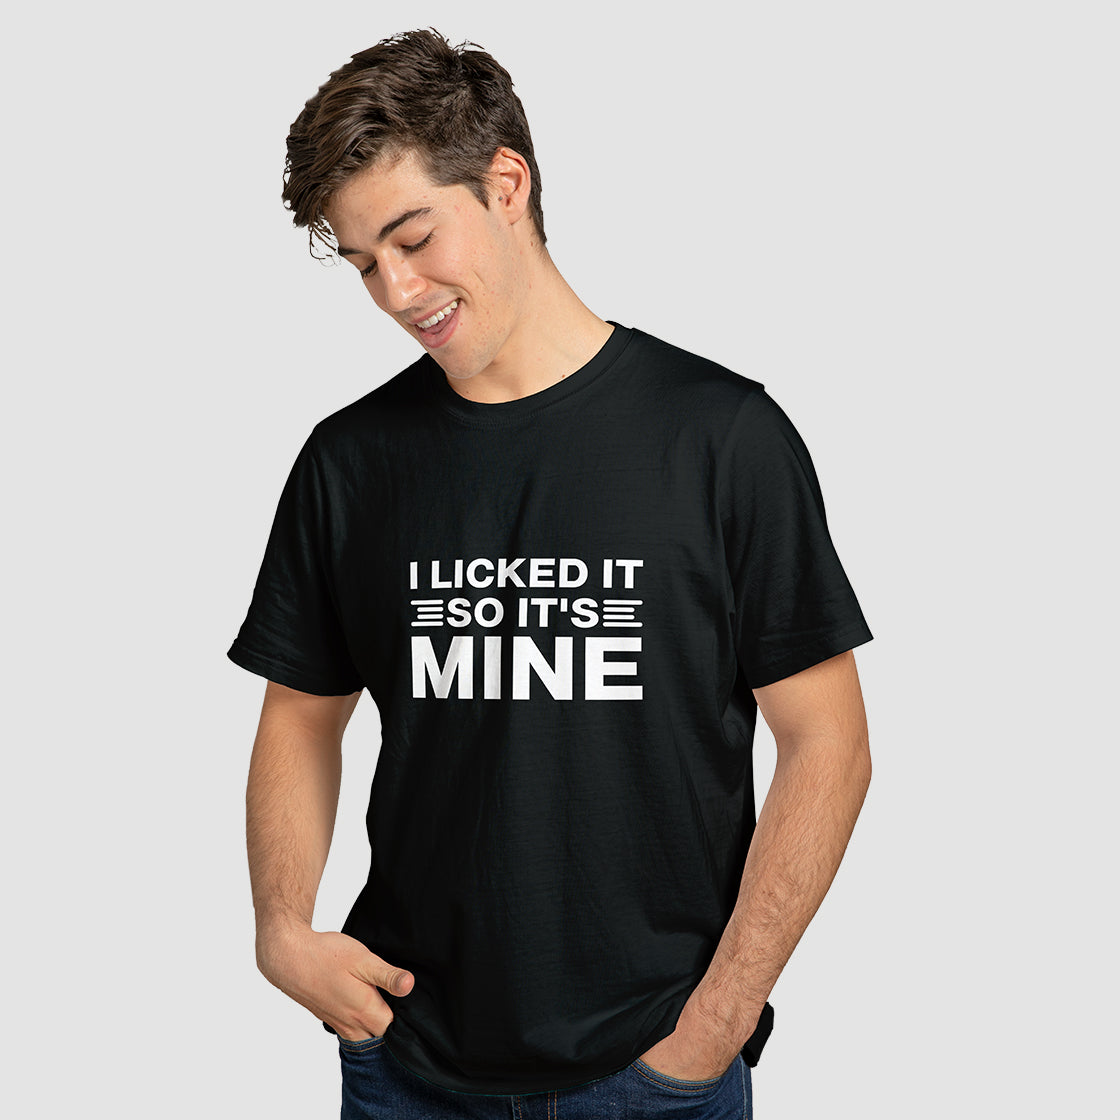 "I Licked It So Its Mine" T-Shirt